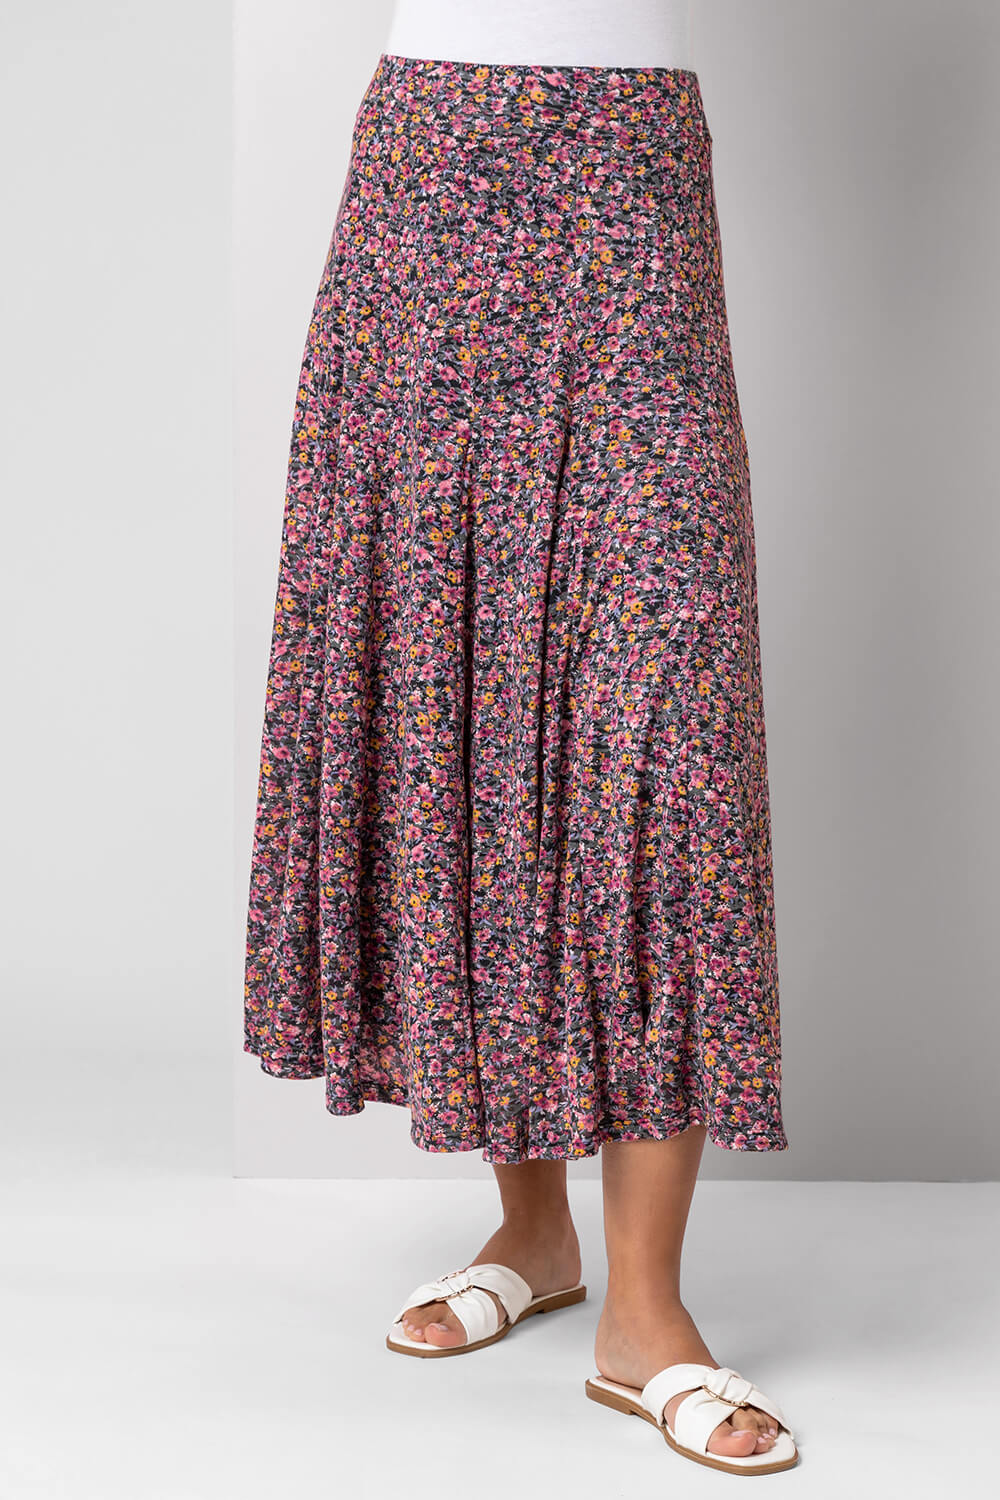 PINK Ditsy Floral Burnout Midi Skirt, Image 2 of 4